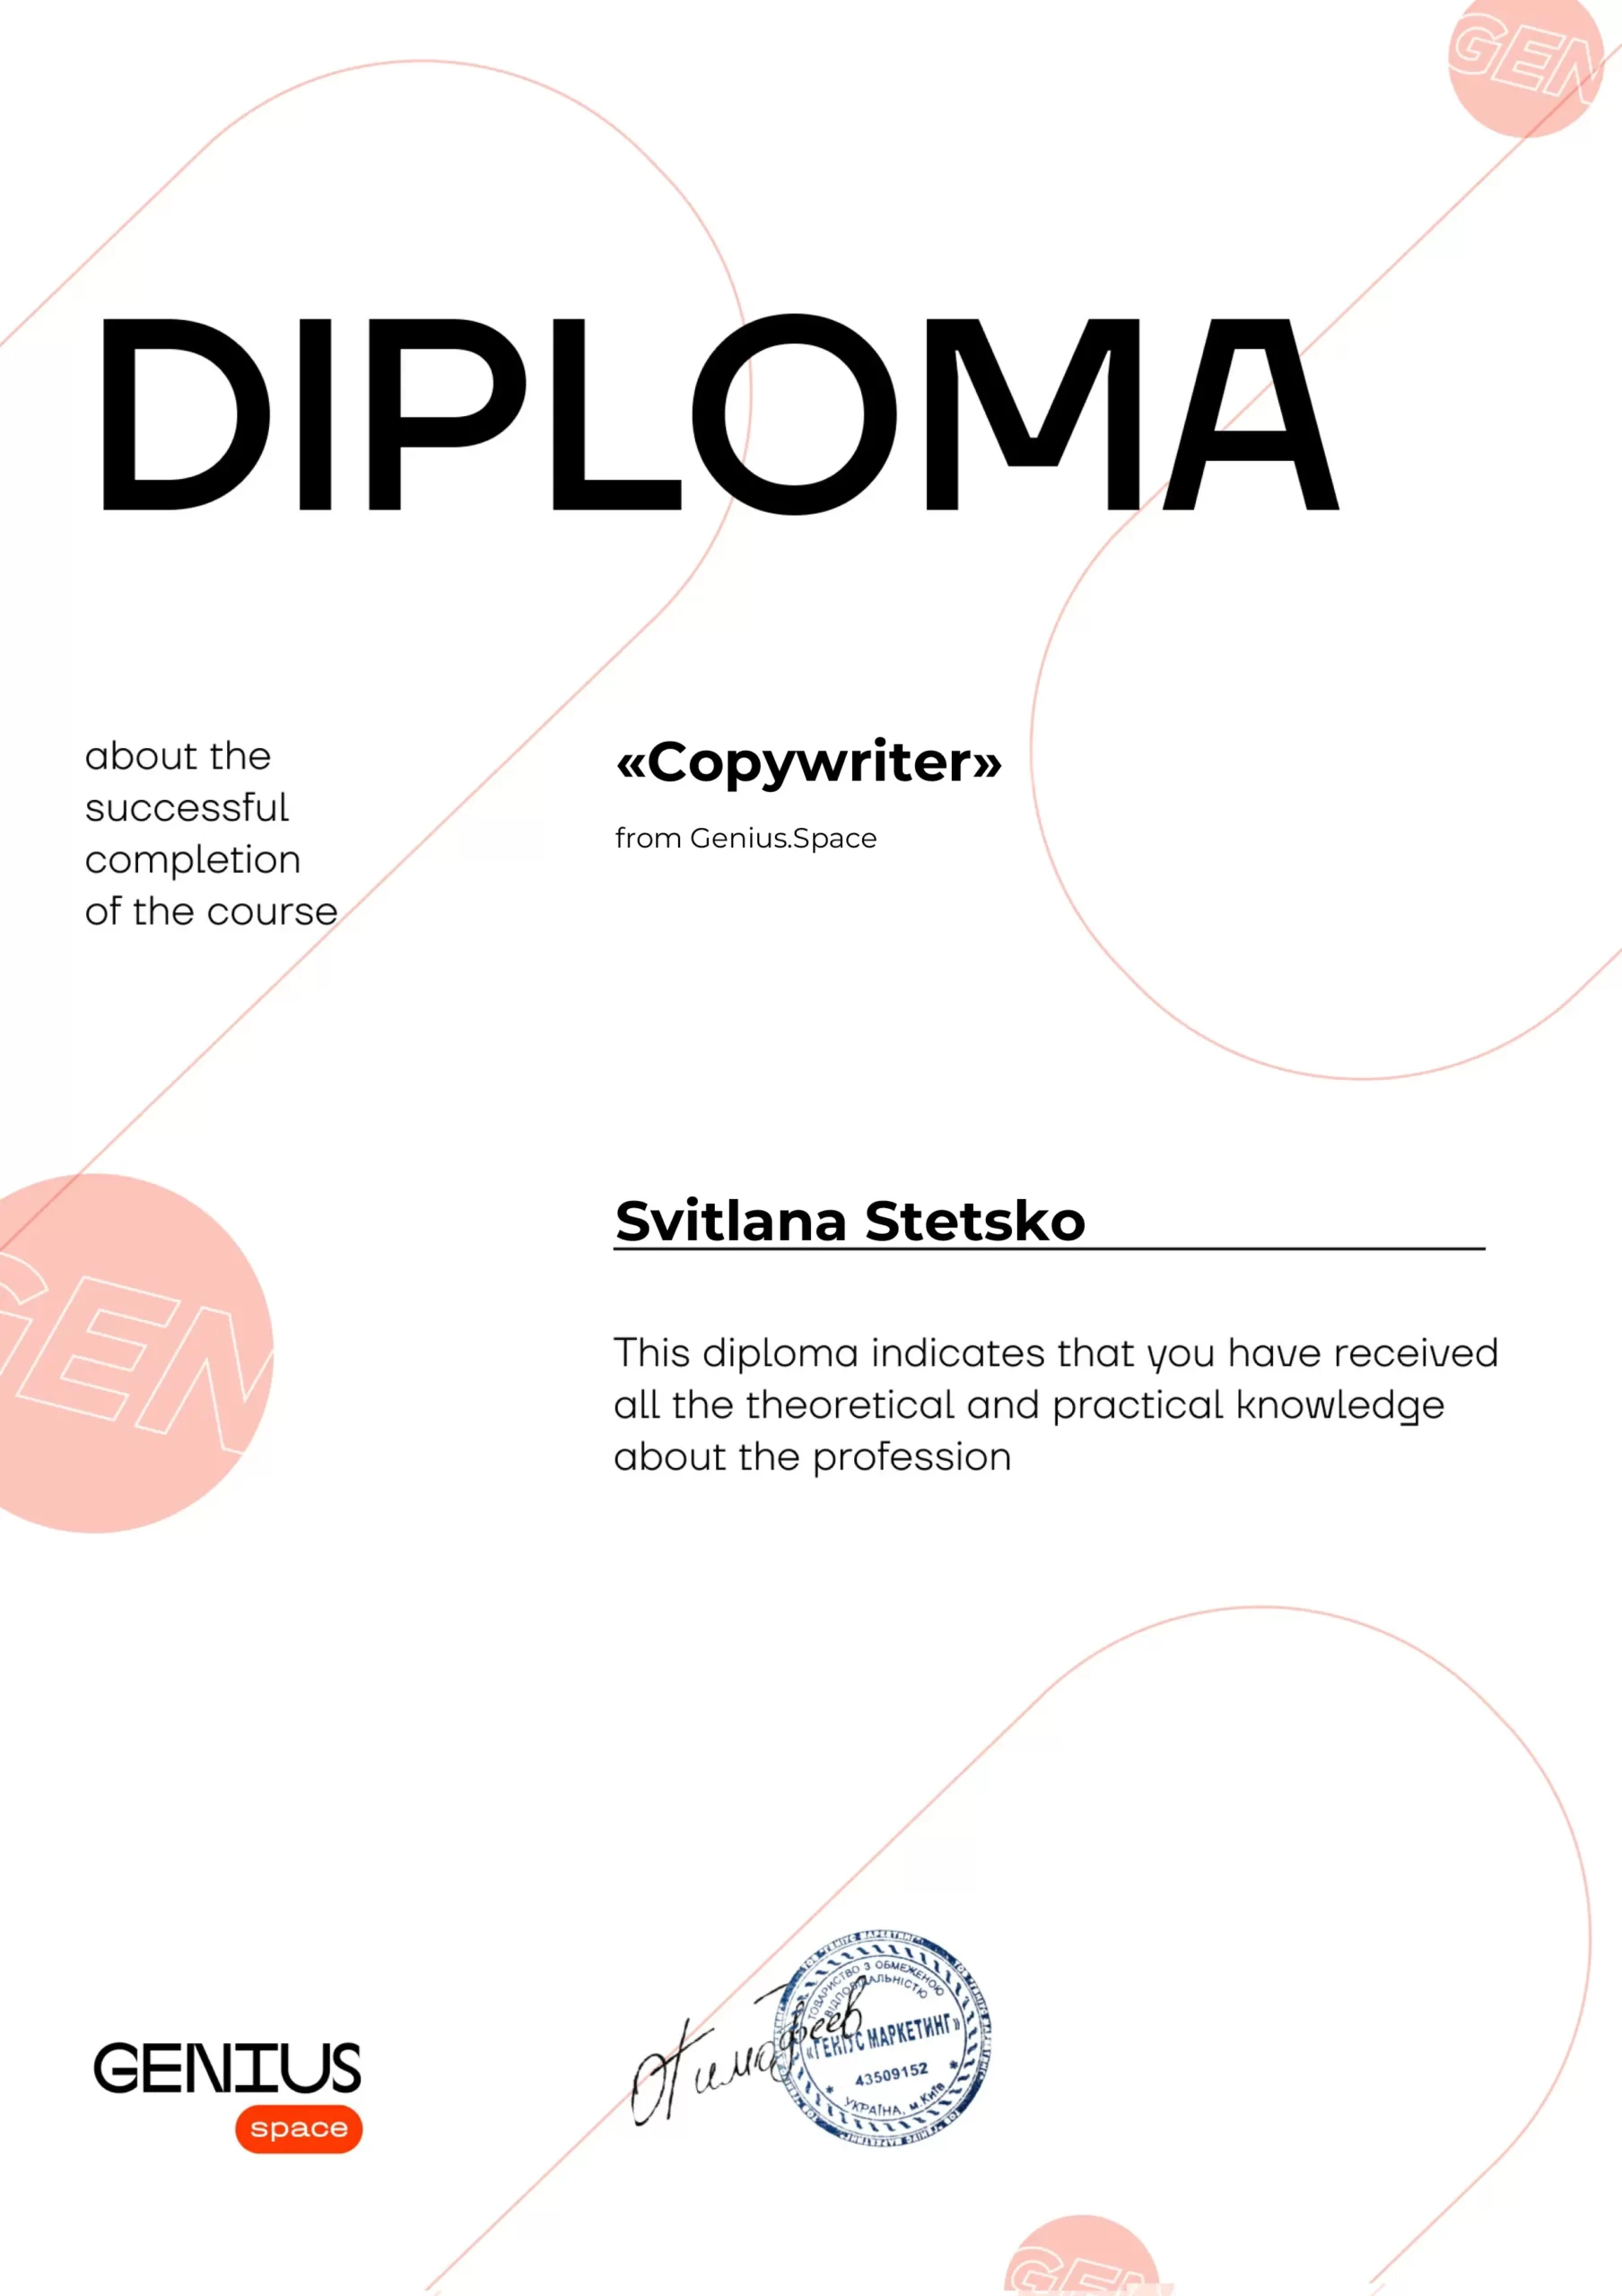 Diploma Copywriter Stetsko